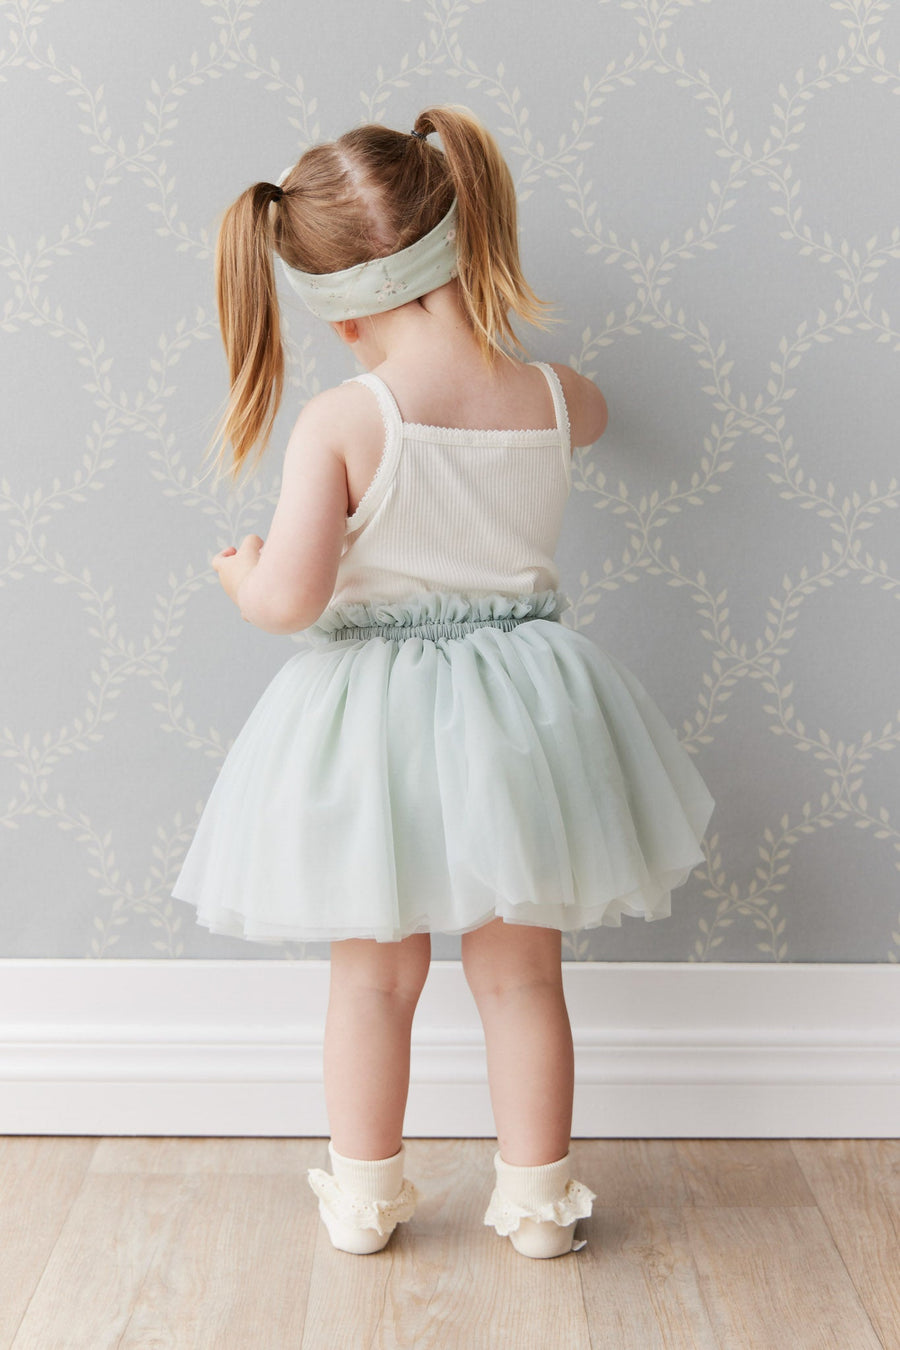 Classic Tutu Skirt - Ocean Spray Childrens Skirt from Jamie Kay USA